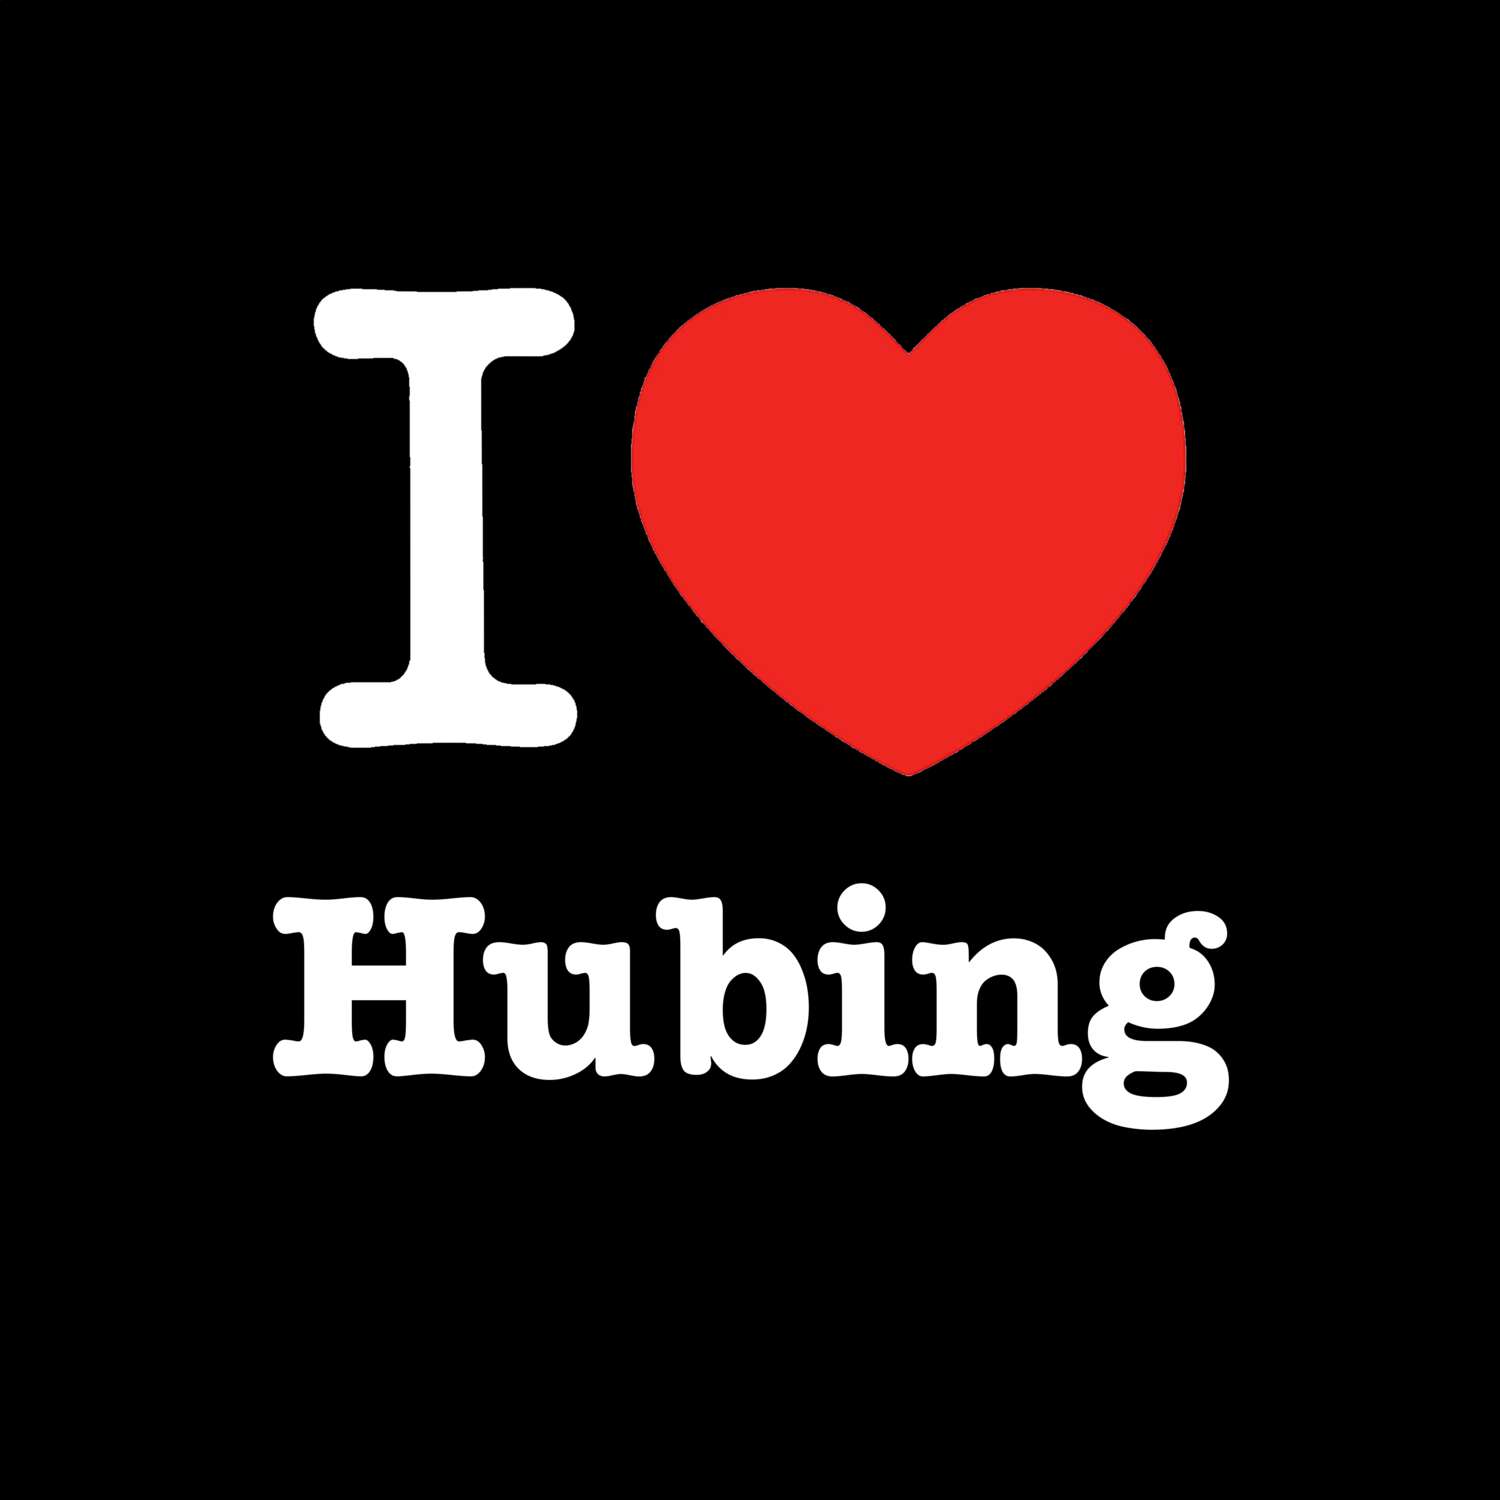 Hubing T-Shirt »I love«